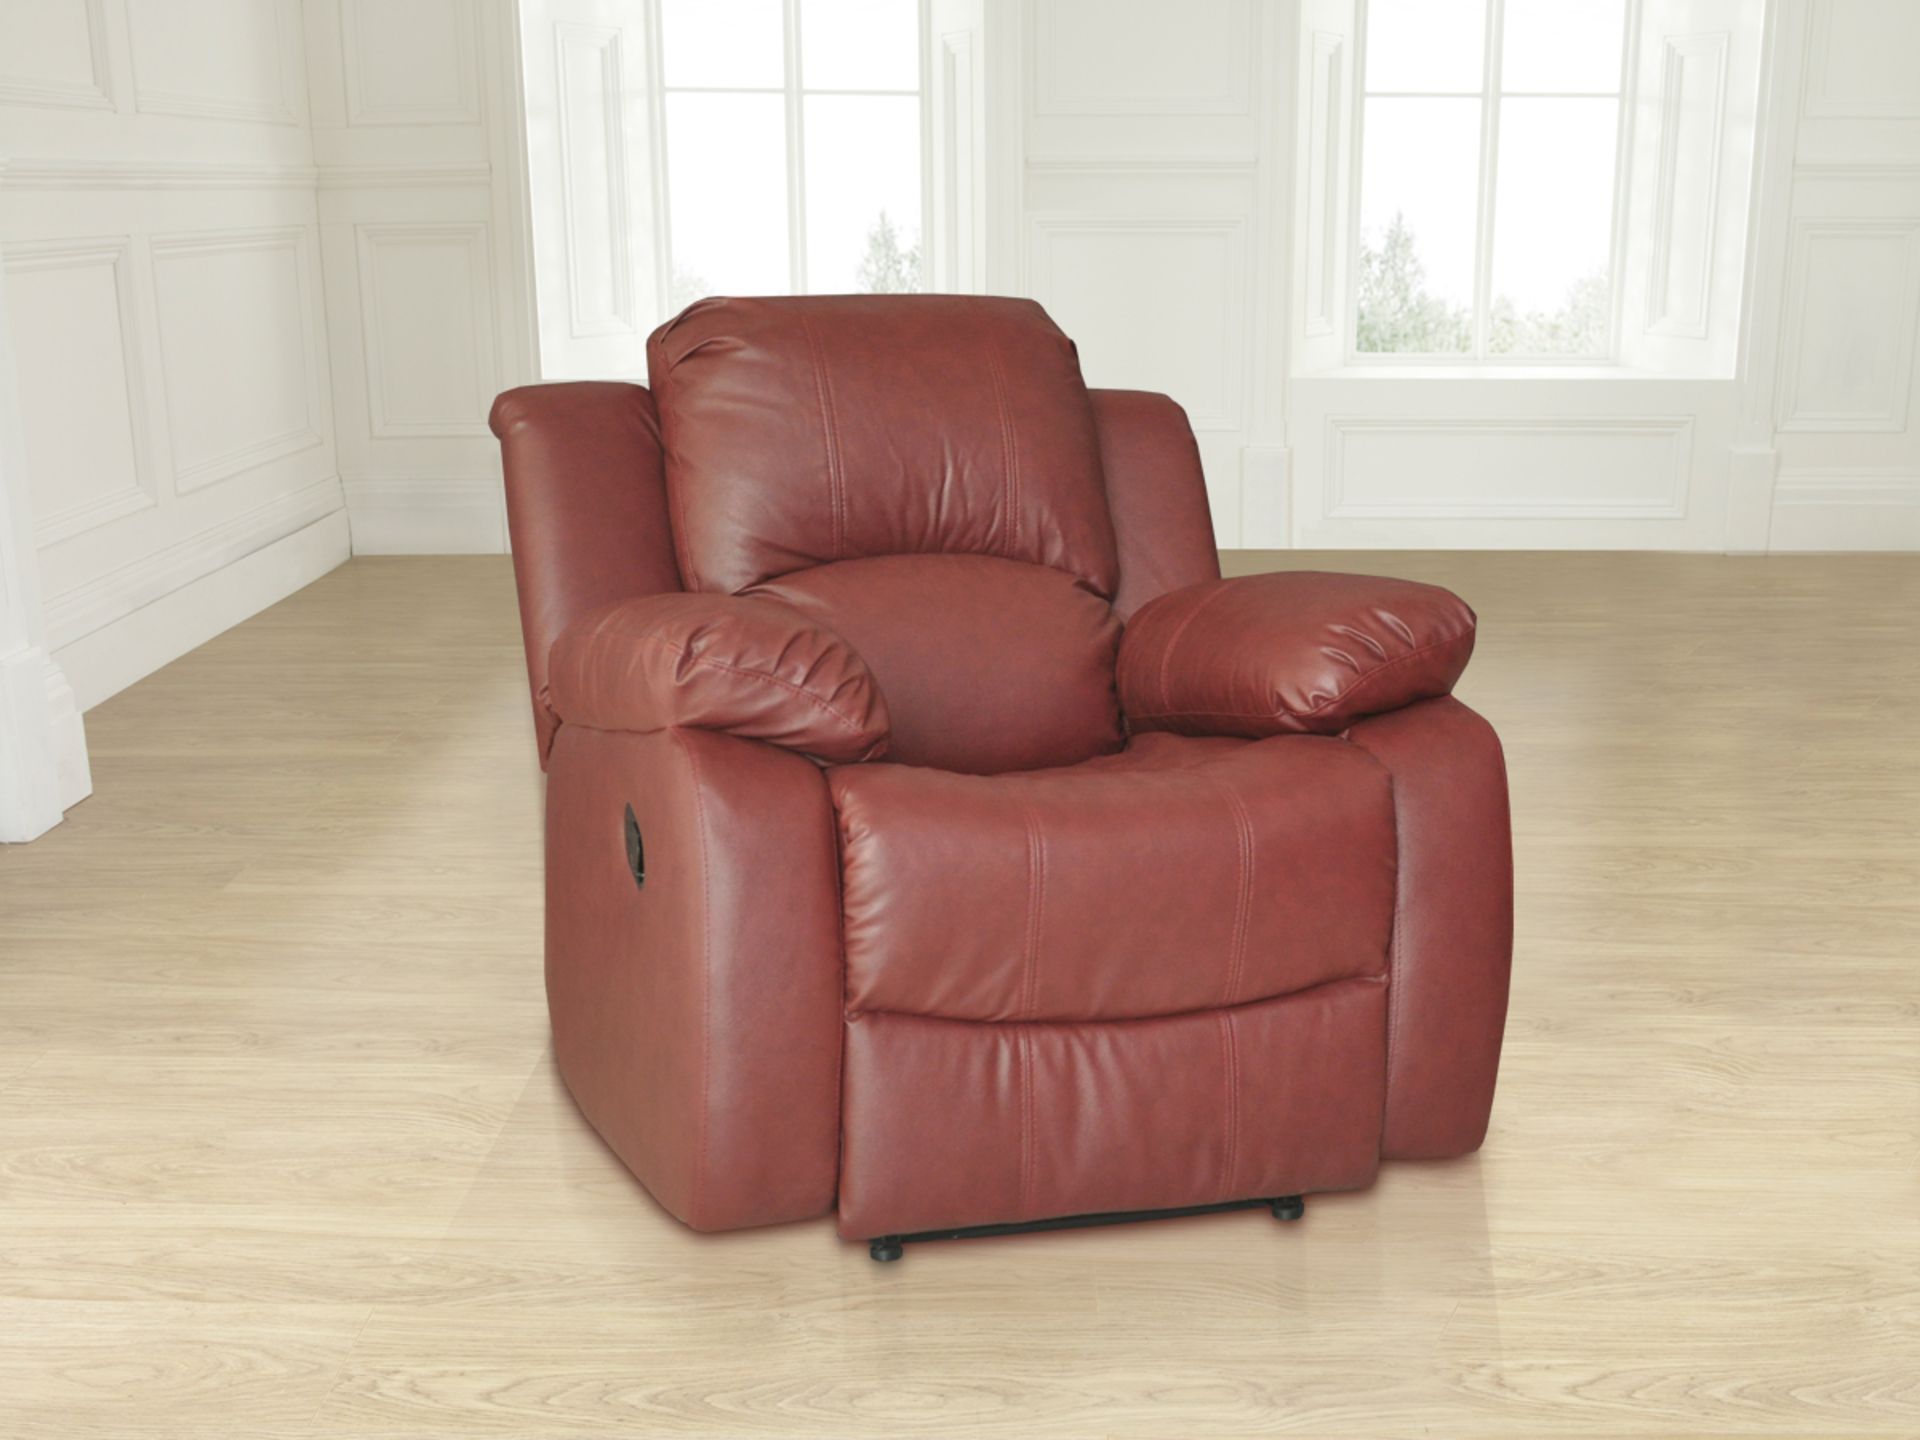 Supreme Valance burgandy leather 2 seater reclining sofa - Image 2 of 2